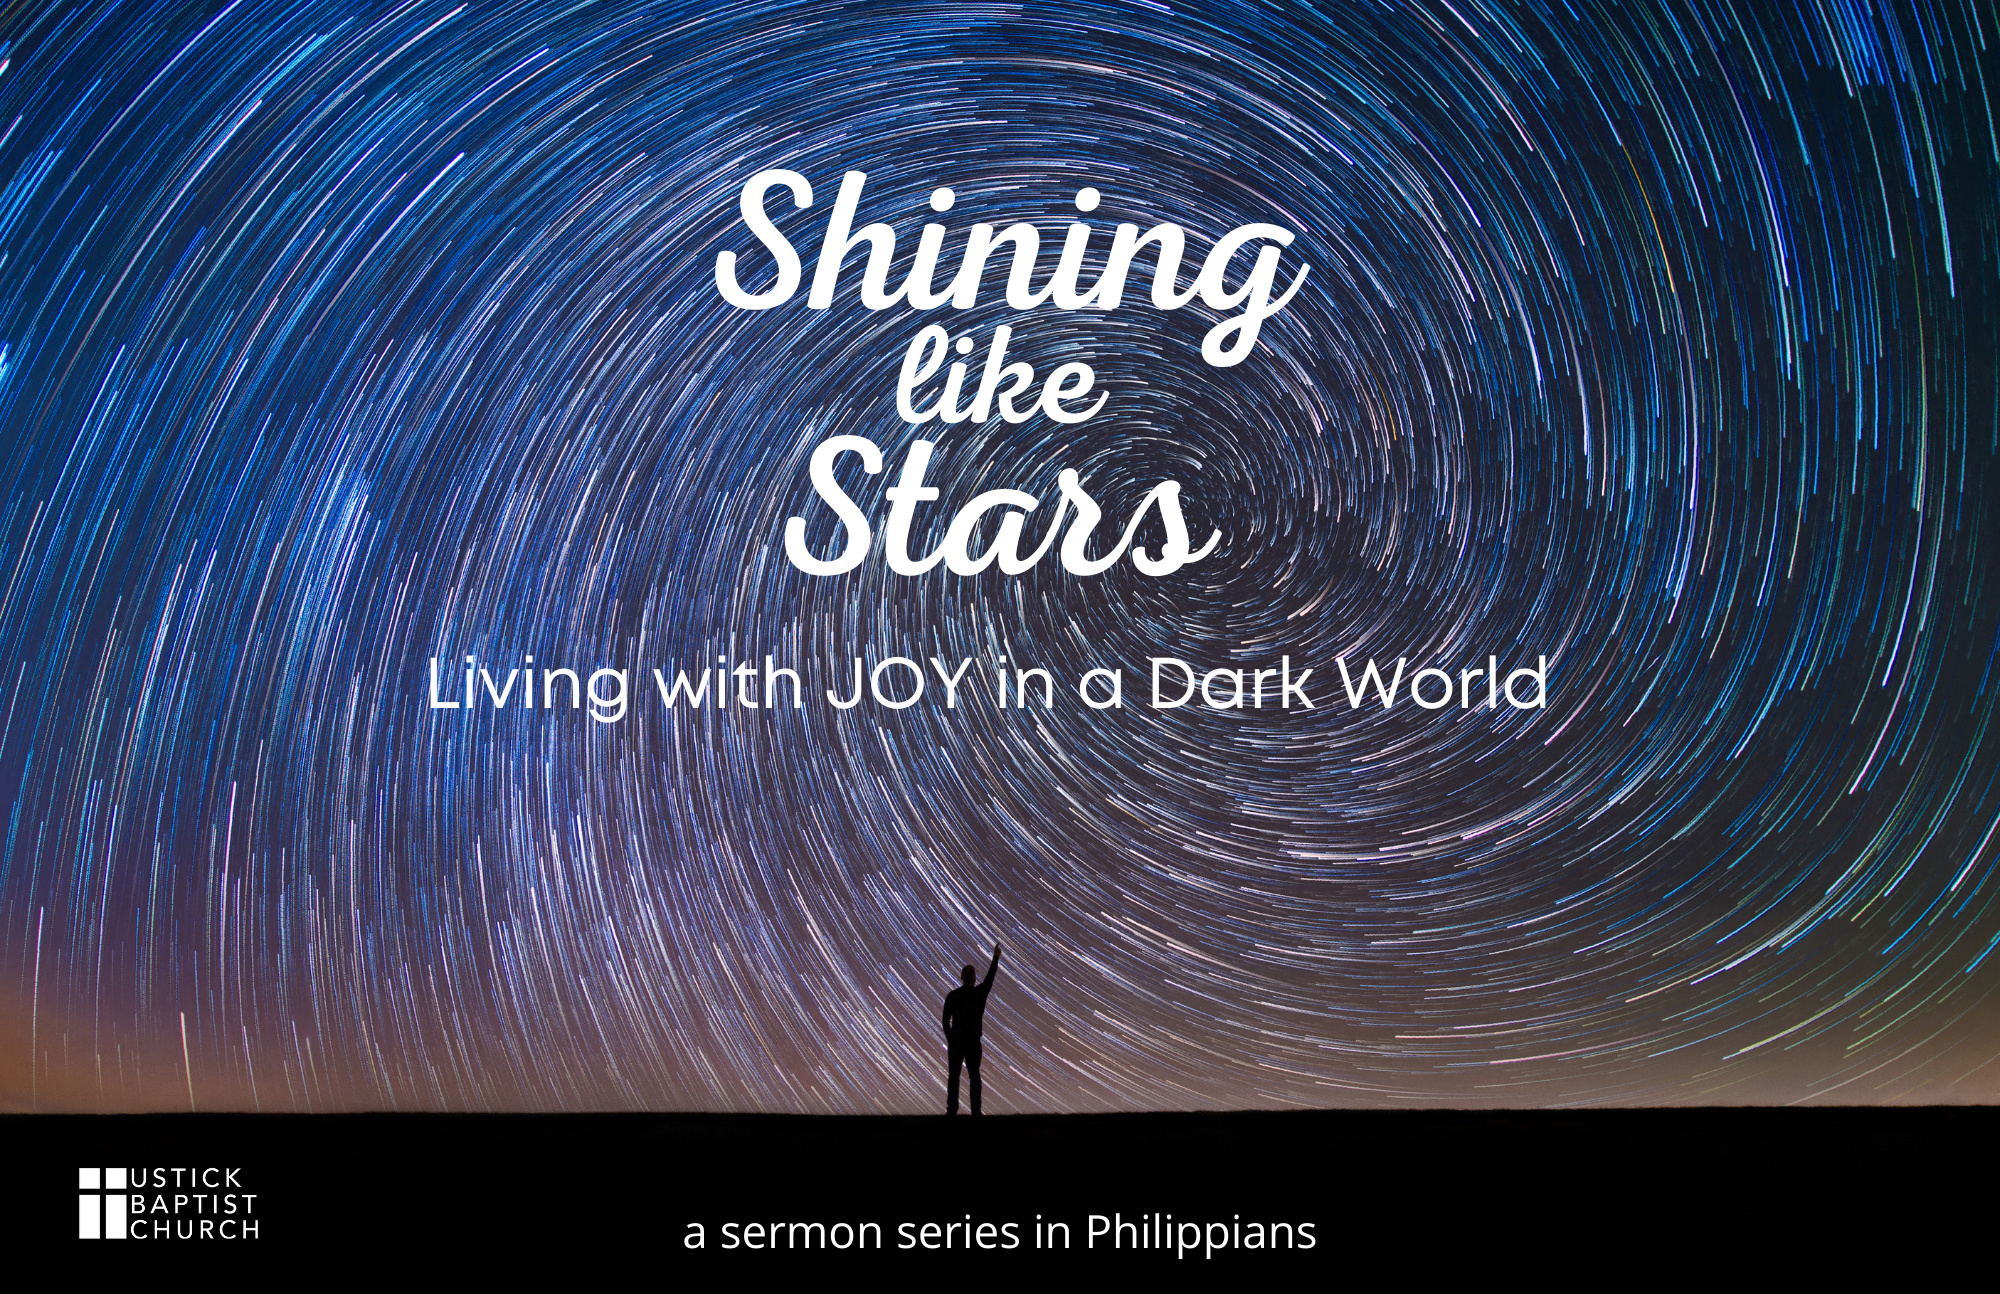 Finding Joy in Christ